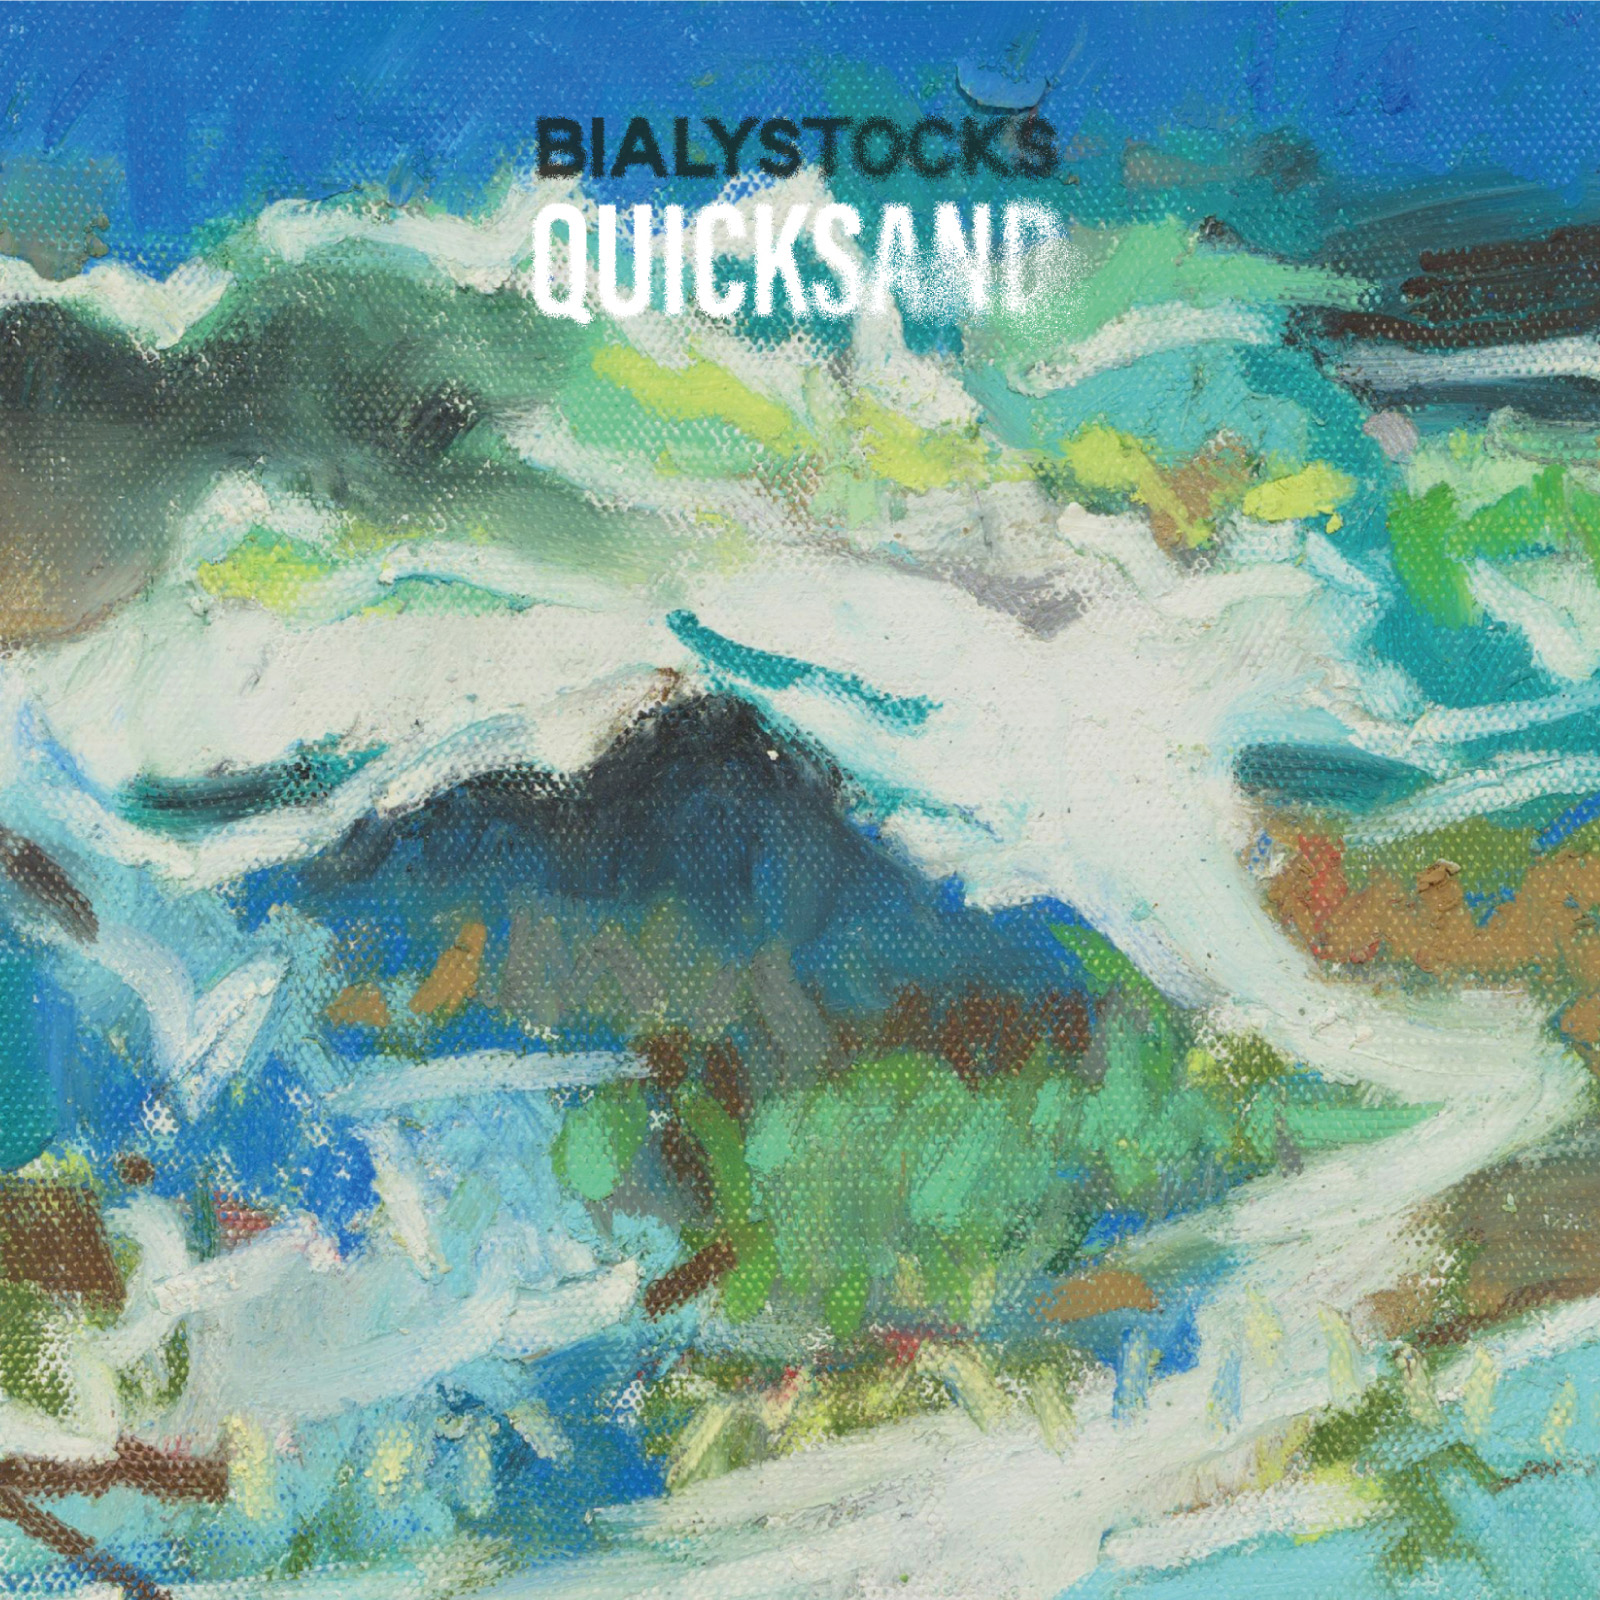 Bialystocks_Quicksand